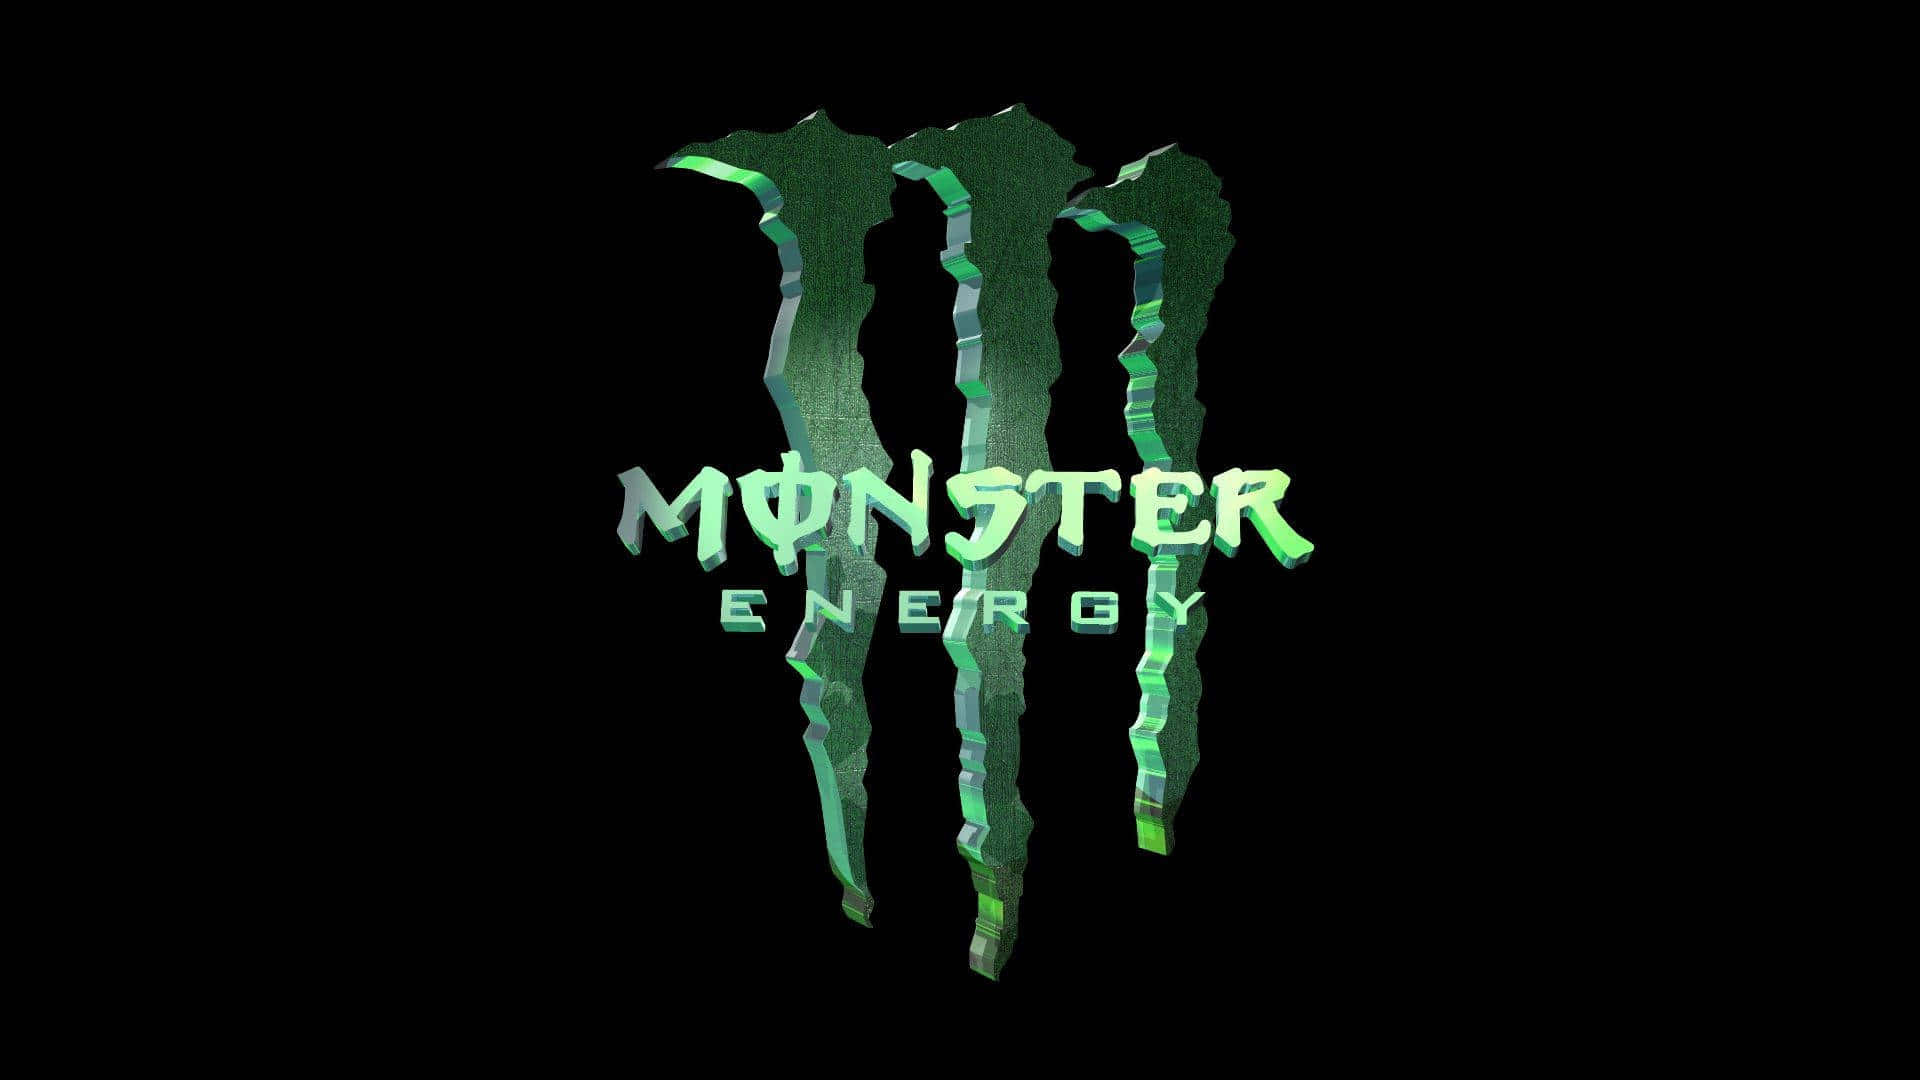 Monsterenergy 1920 X 1080 Hintergrund